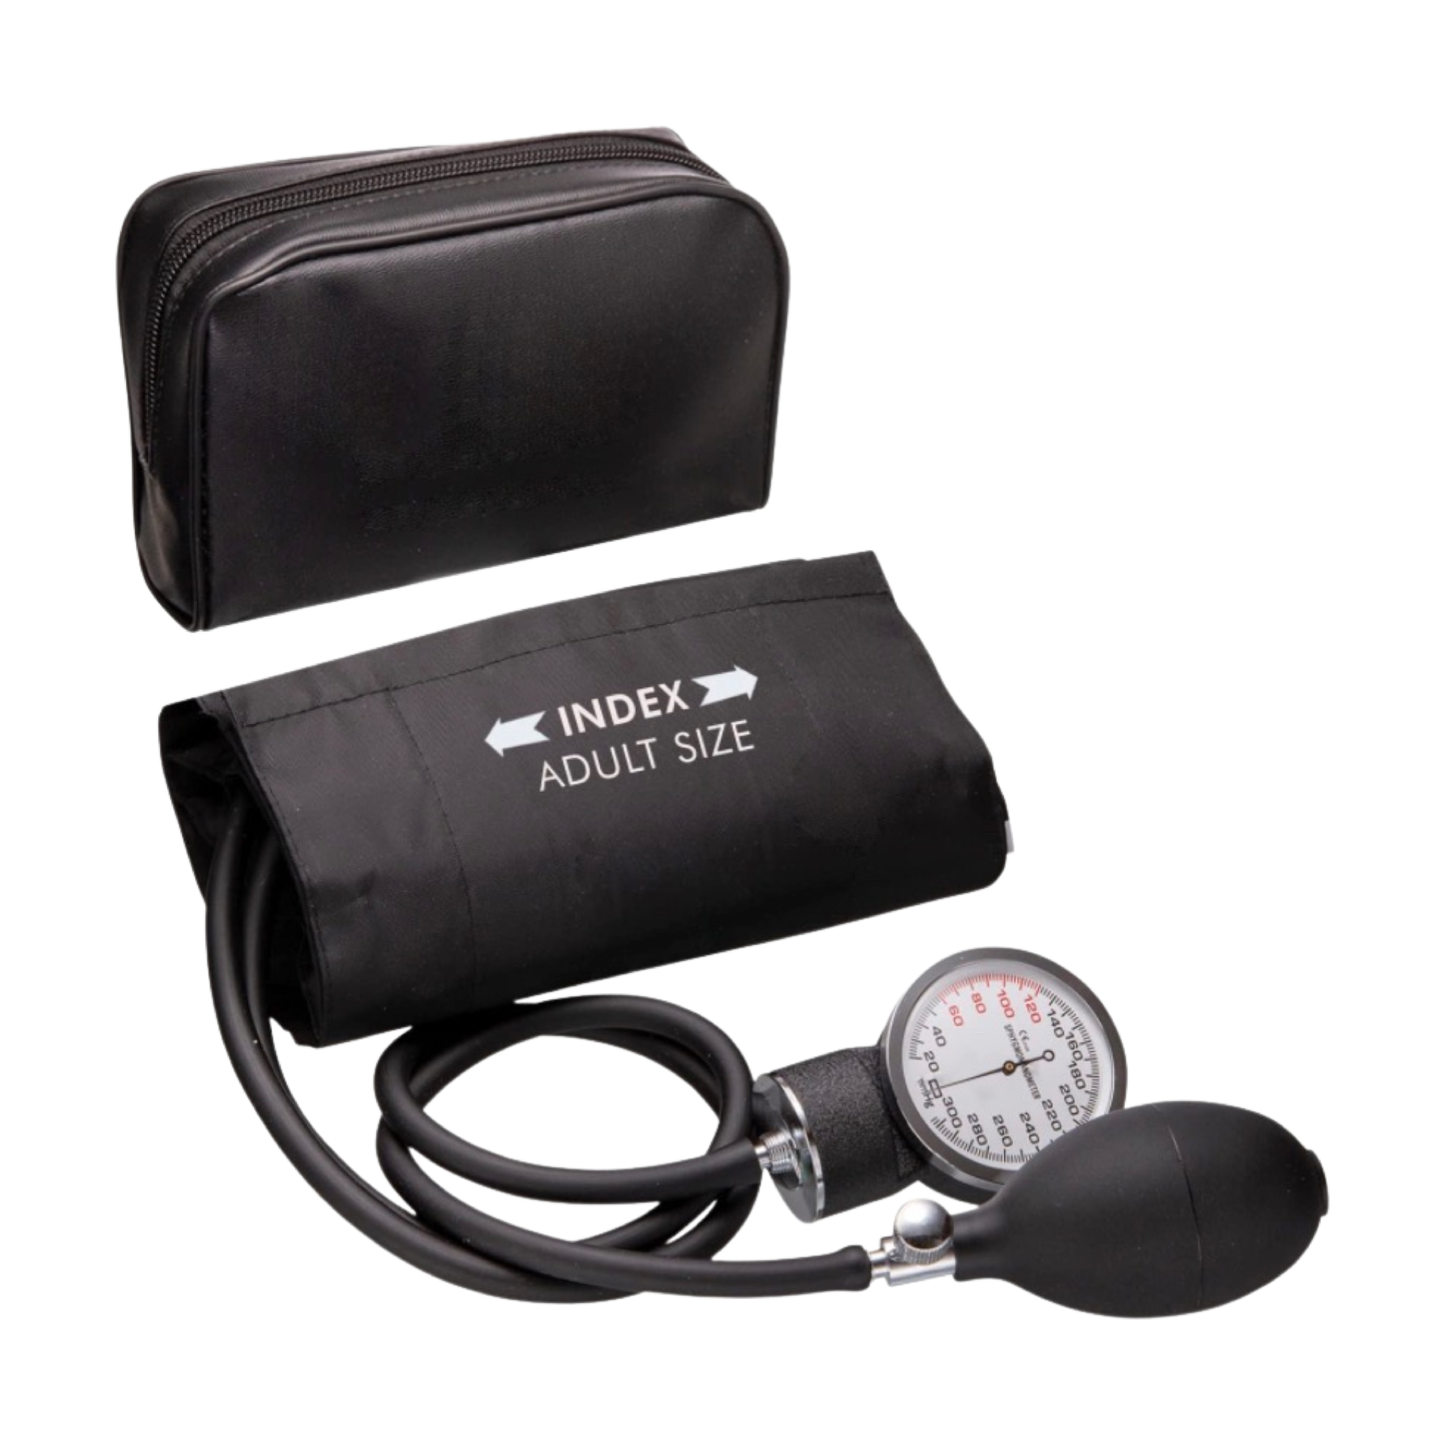 Blood Pressure Cuff- Deluxe Aneroid Sphygmomanometer Blood Pressure Set W/Adult Cuff, Carrying Case